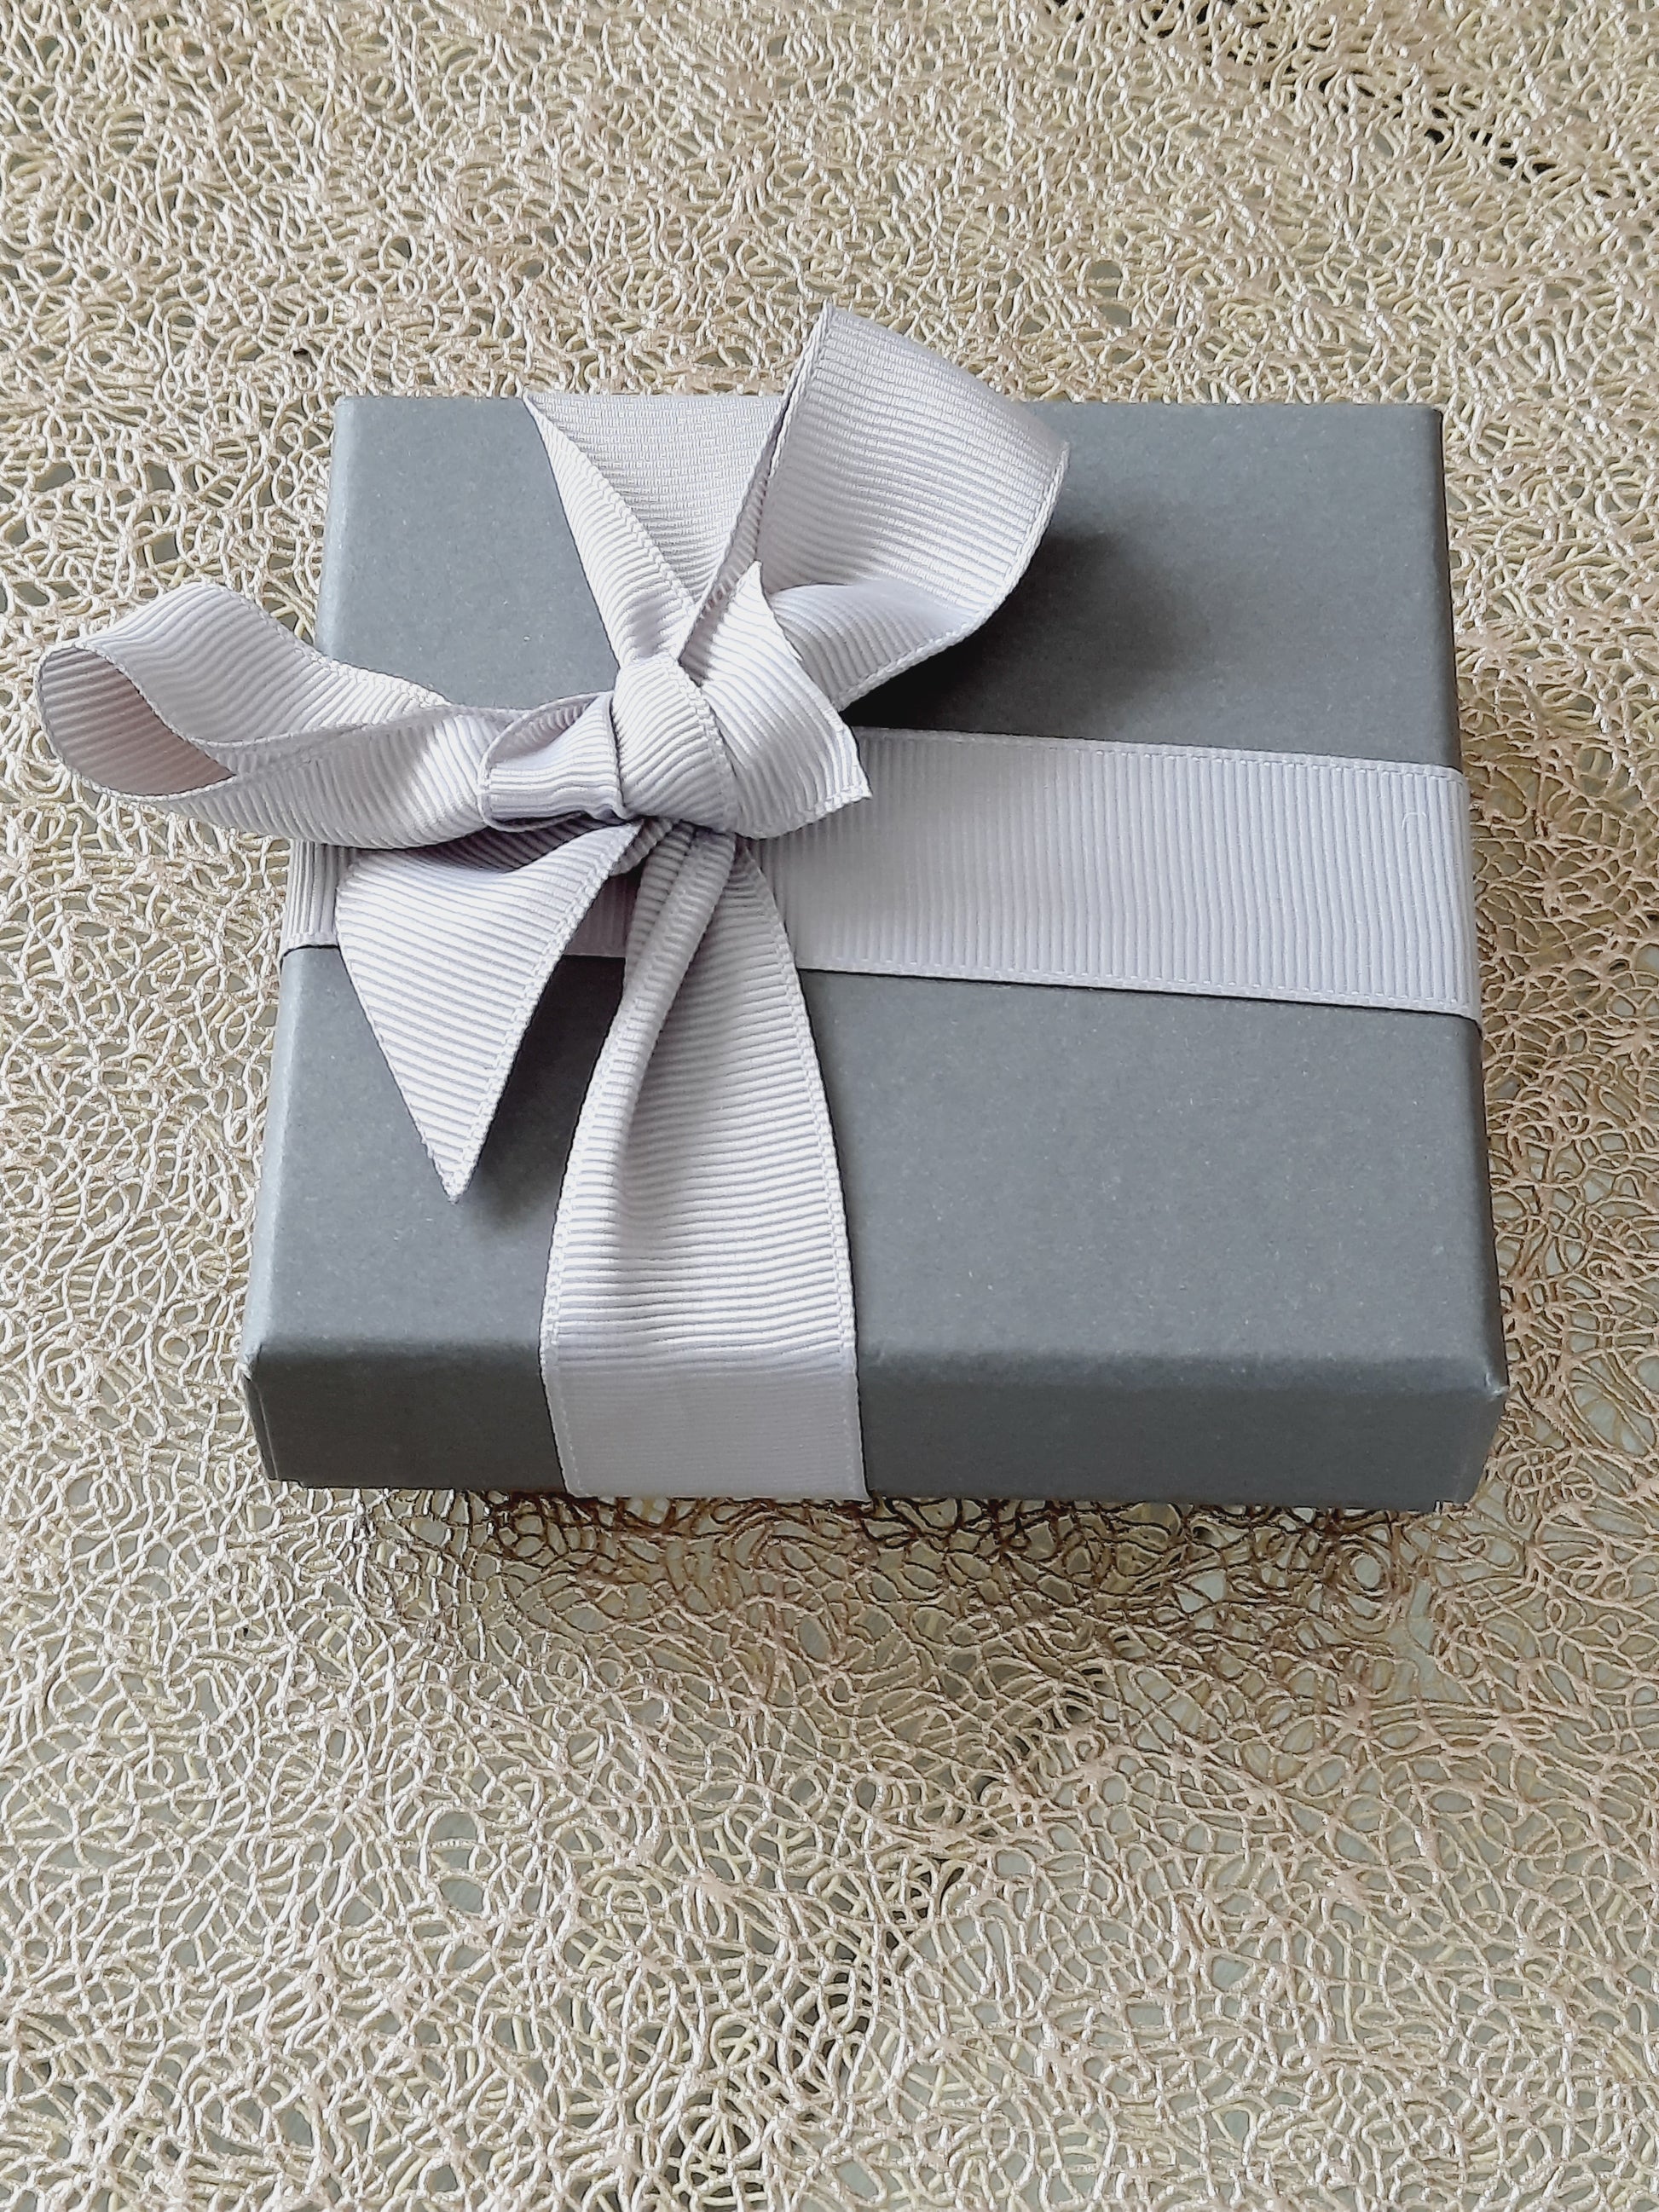 A small gray gift box with silver ribbon.